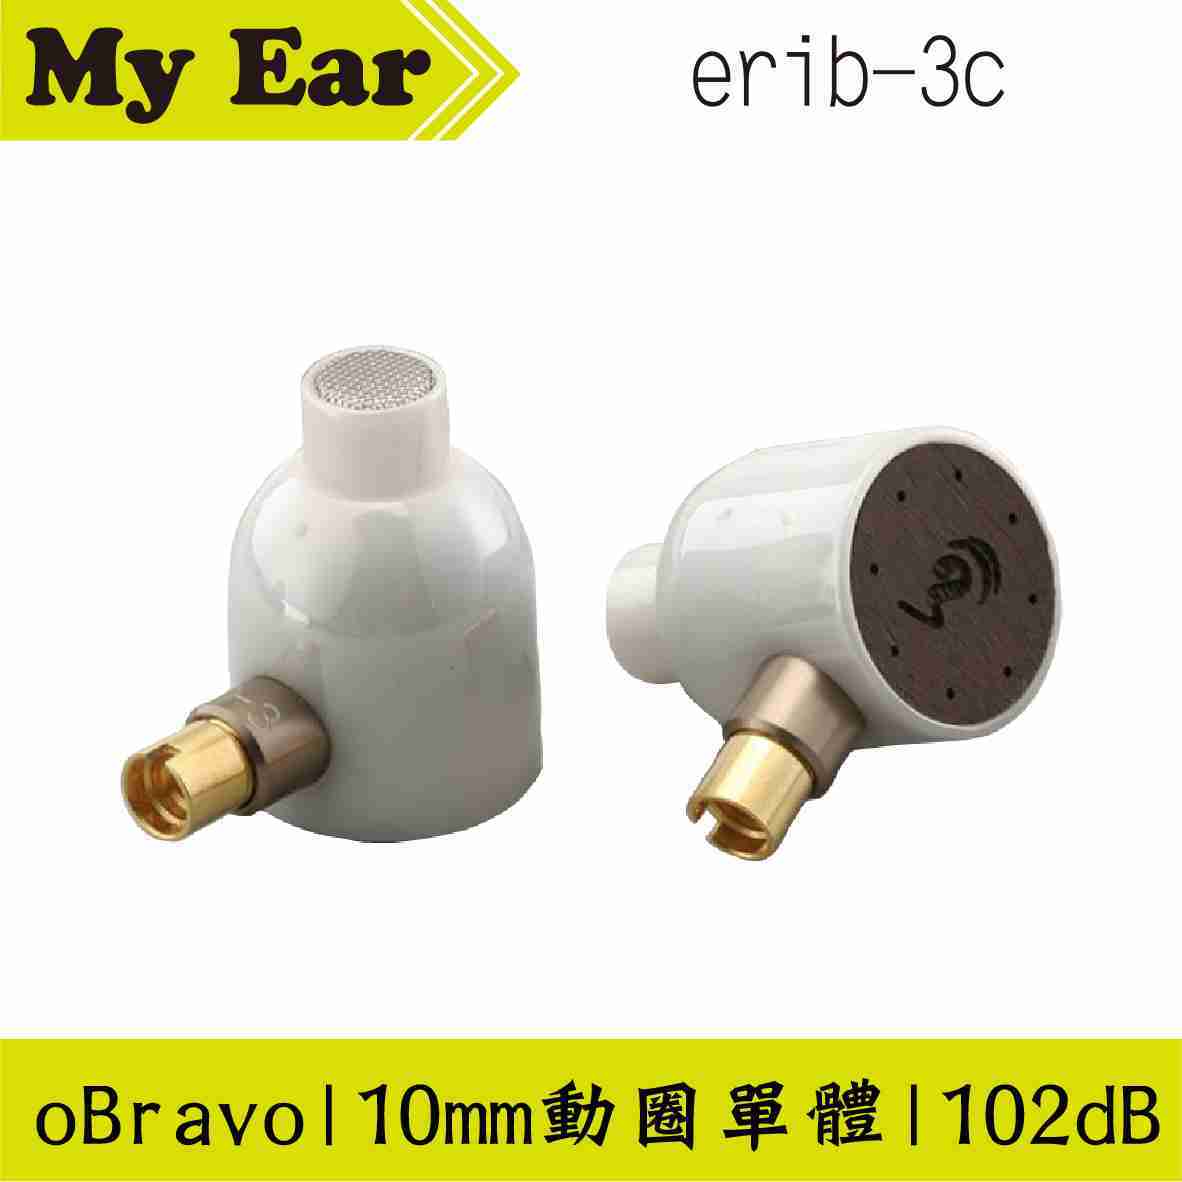 oBravo erib-3w 平面振膜 耳道式耳機 | My Ear耳機專門店